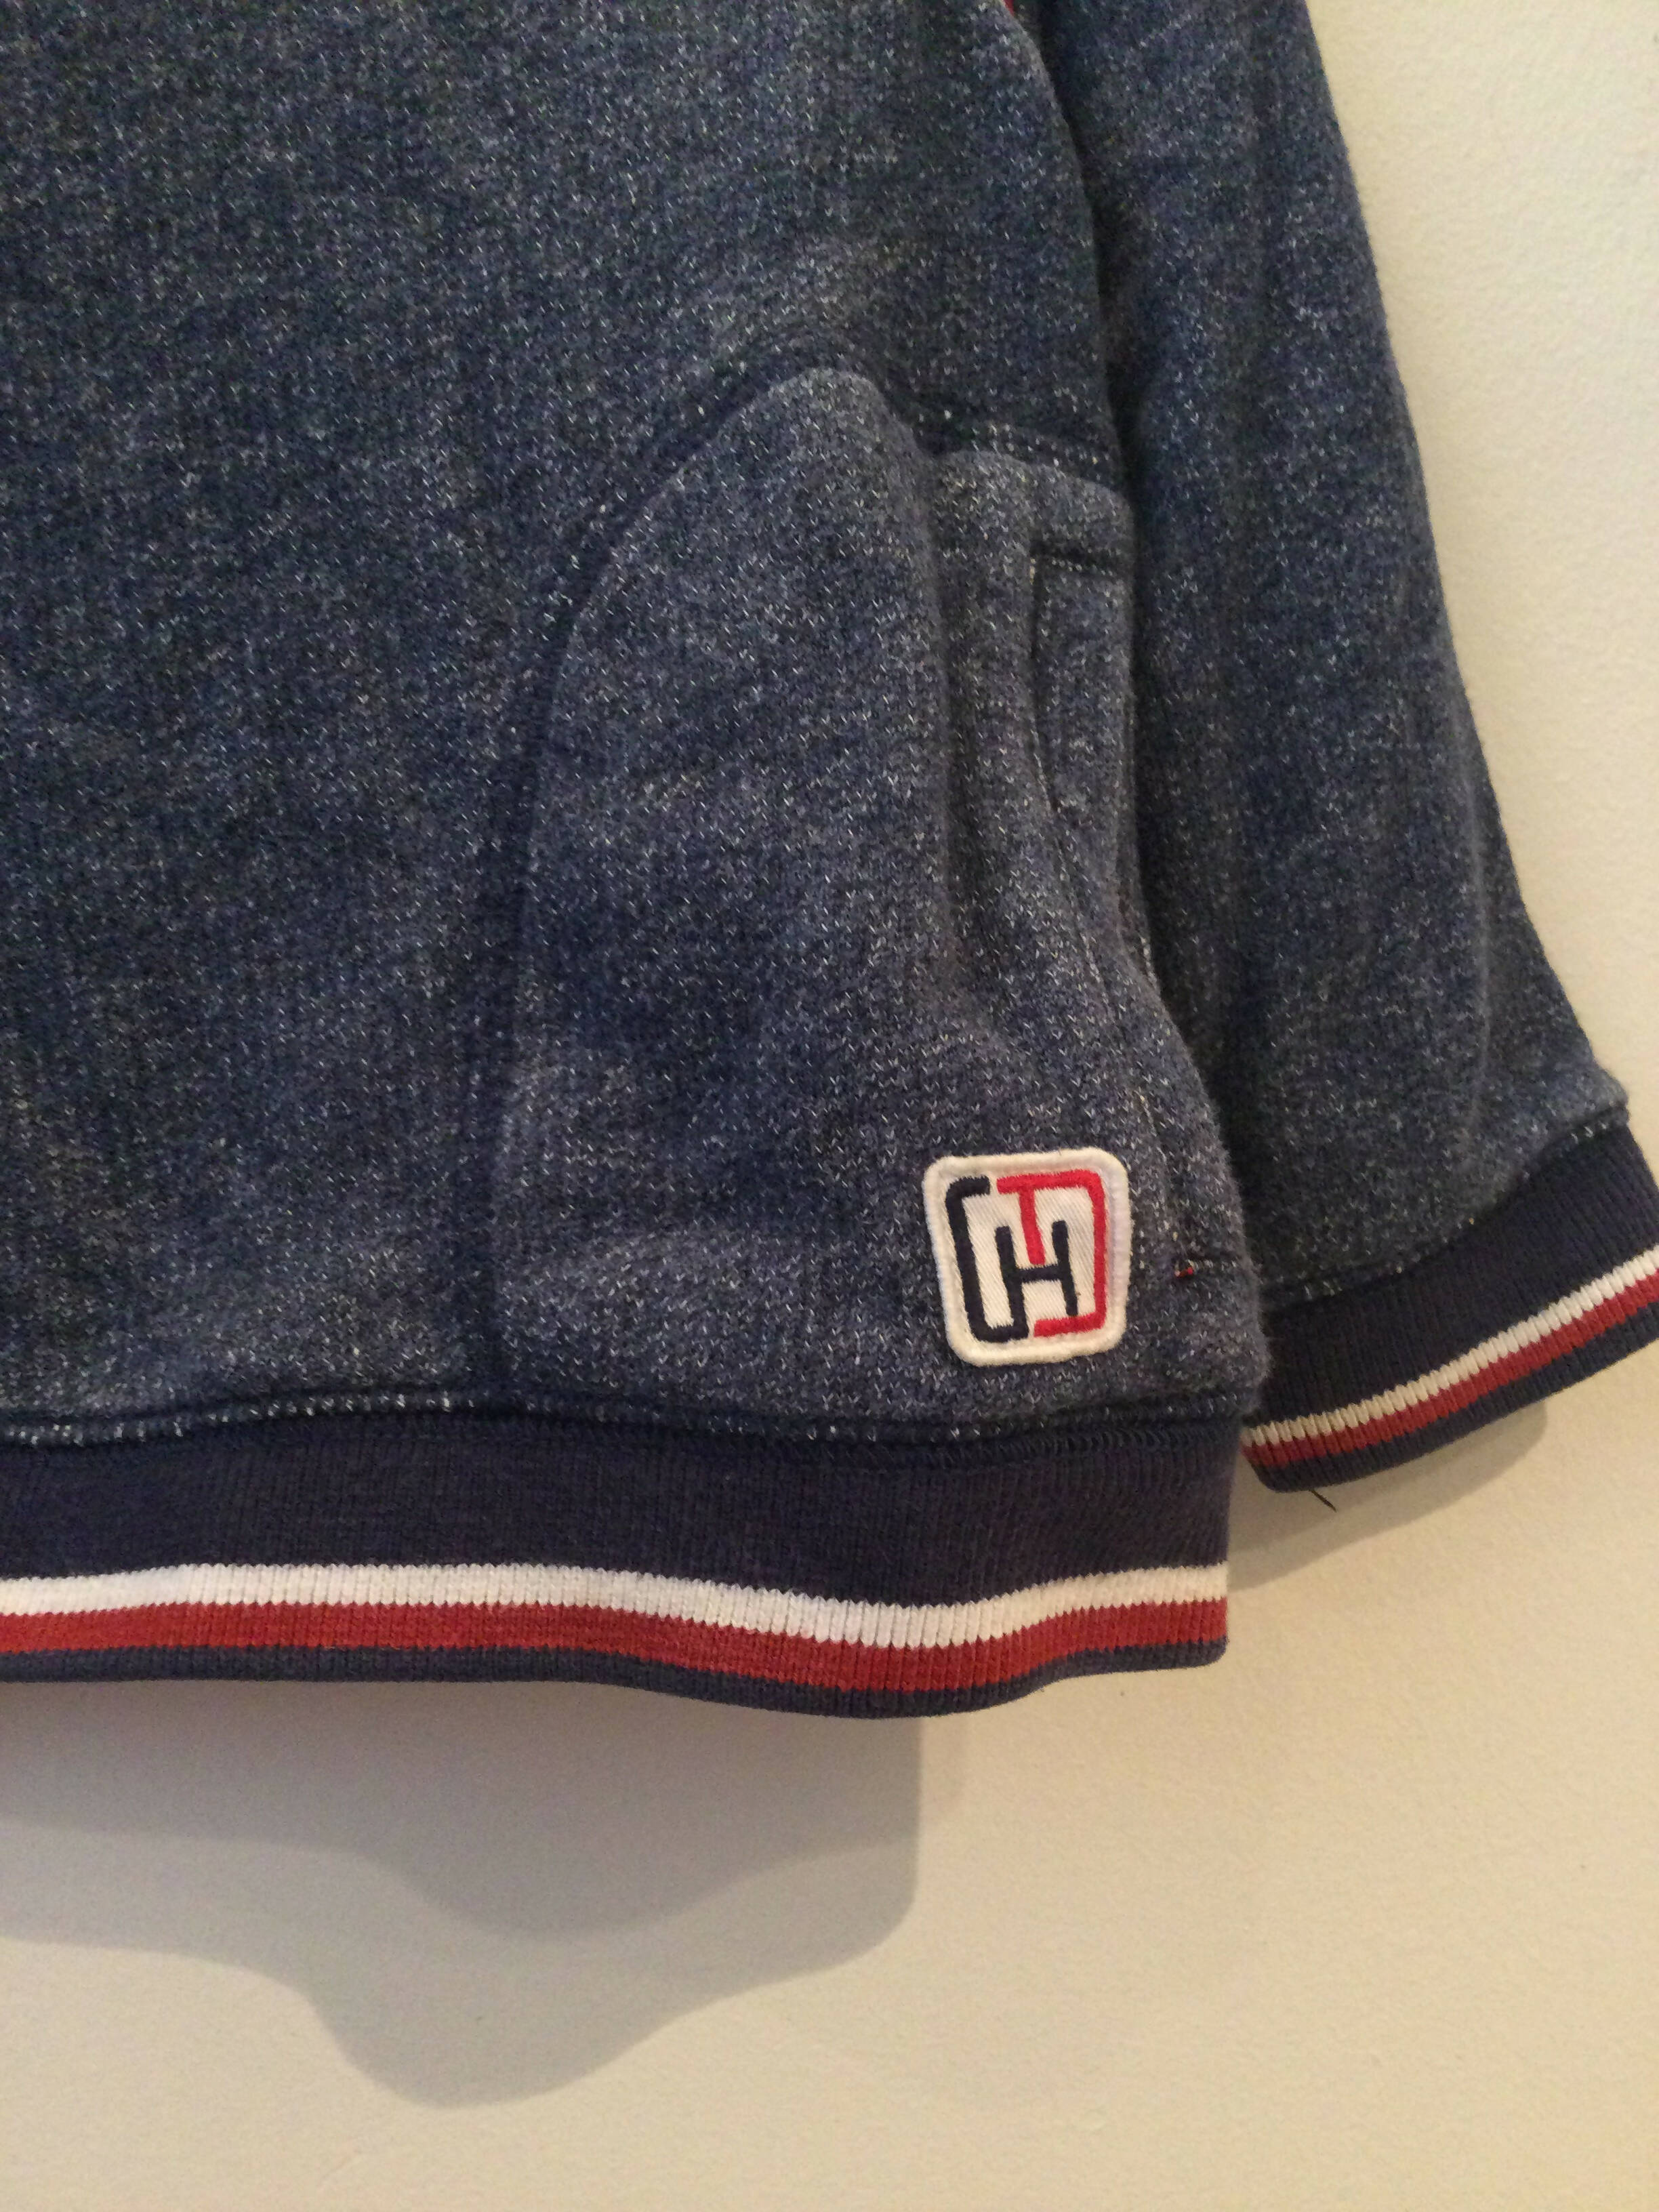 Tommy Hilfiger | Boys sweatshirt | Kids Winter | Size 2T | Preloved